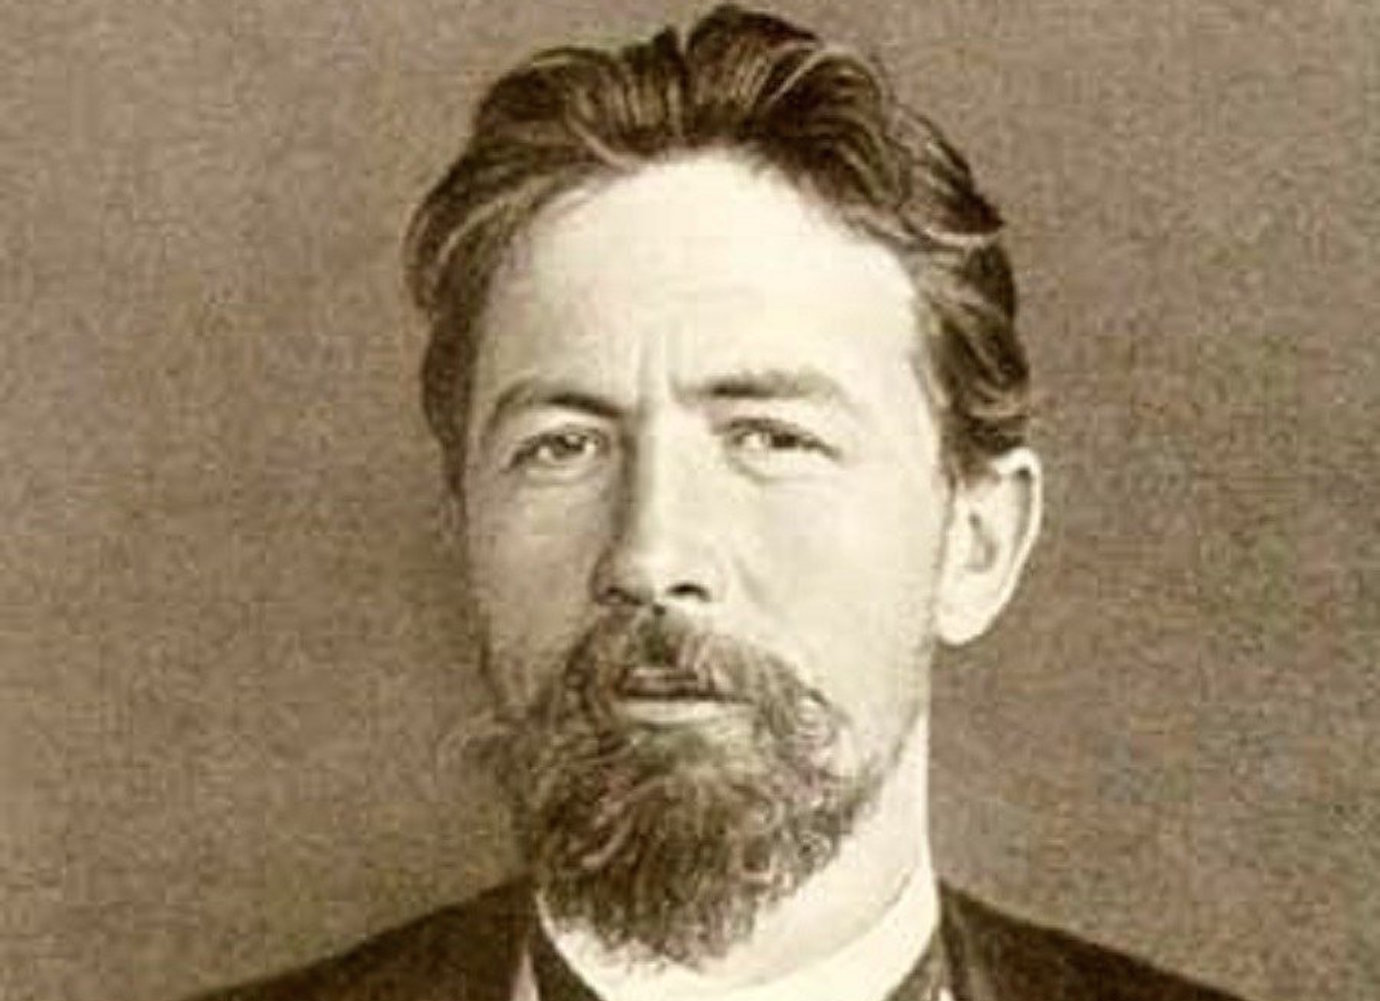 Anton Chekhov: where to start with his literature